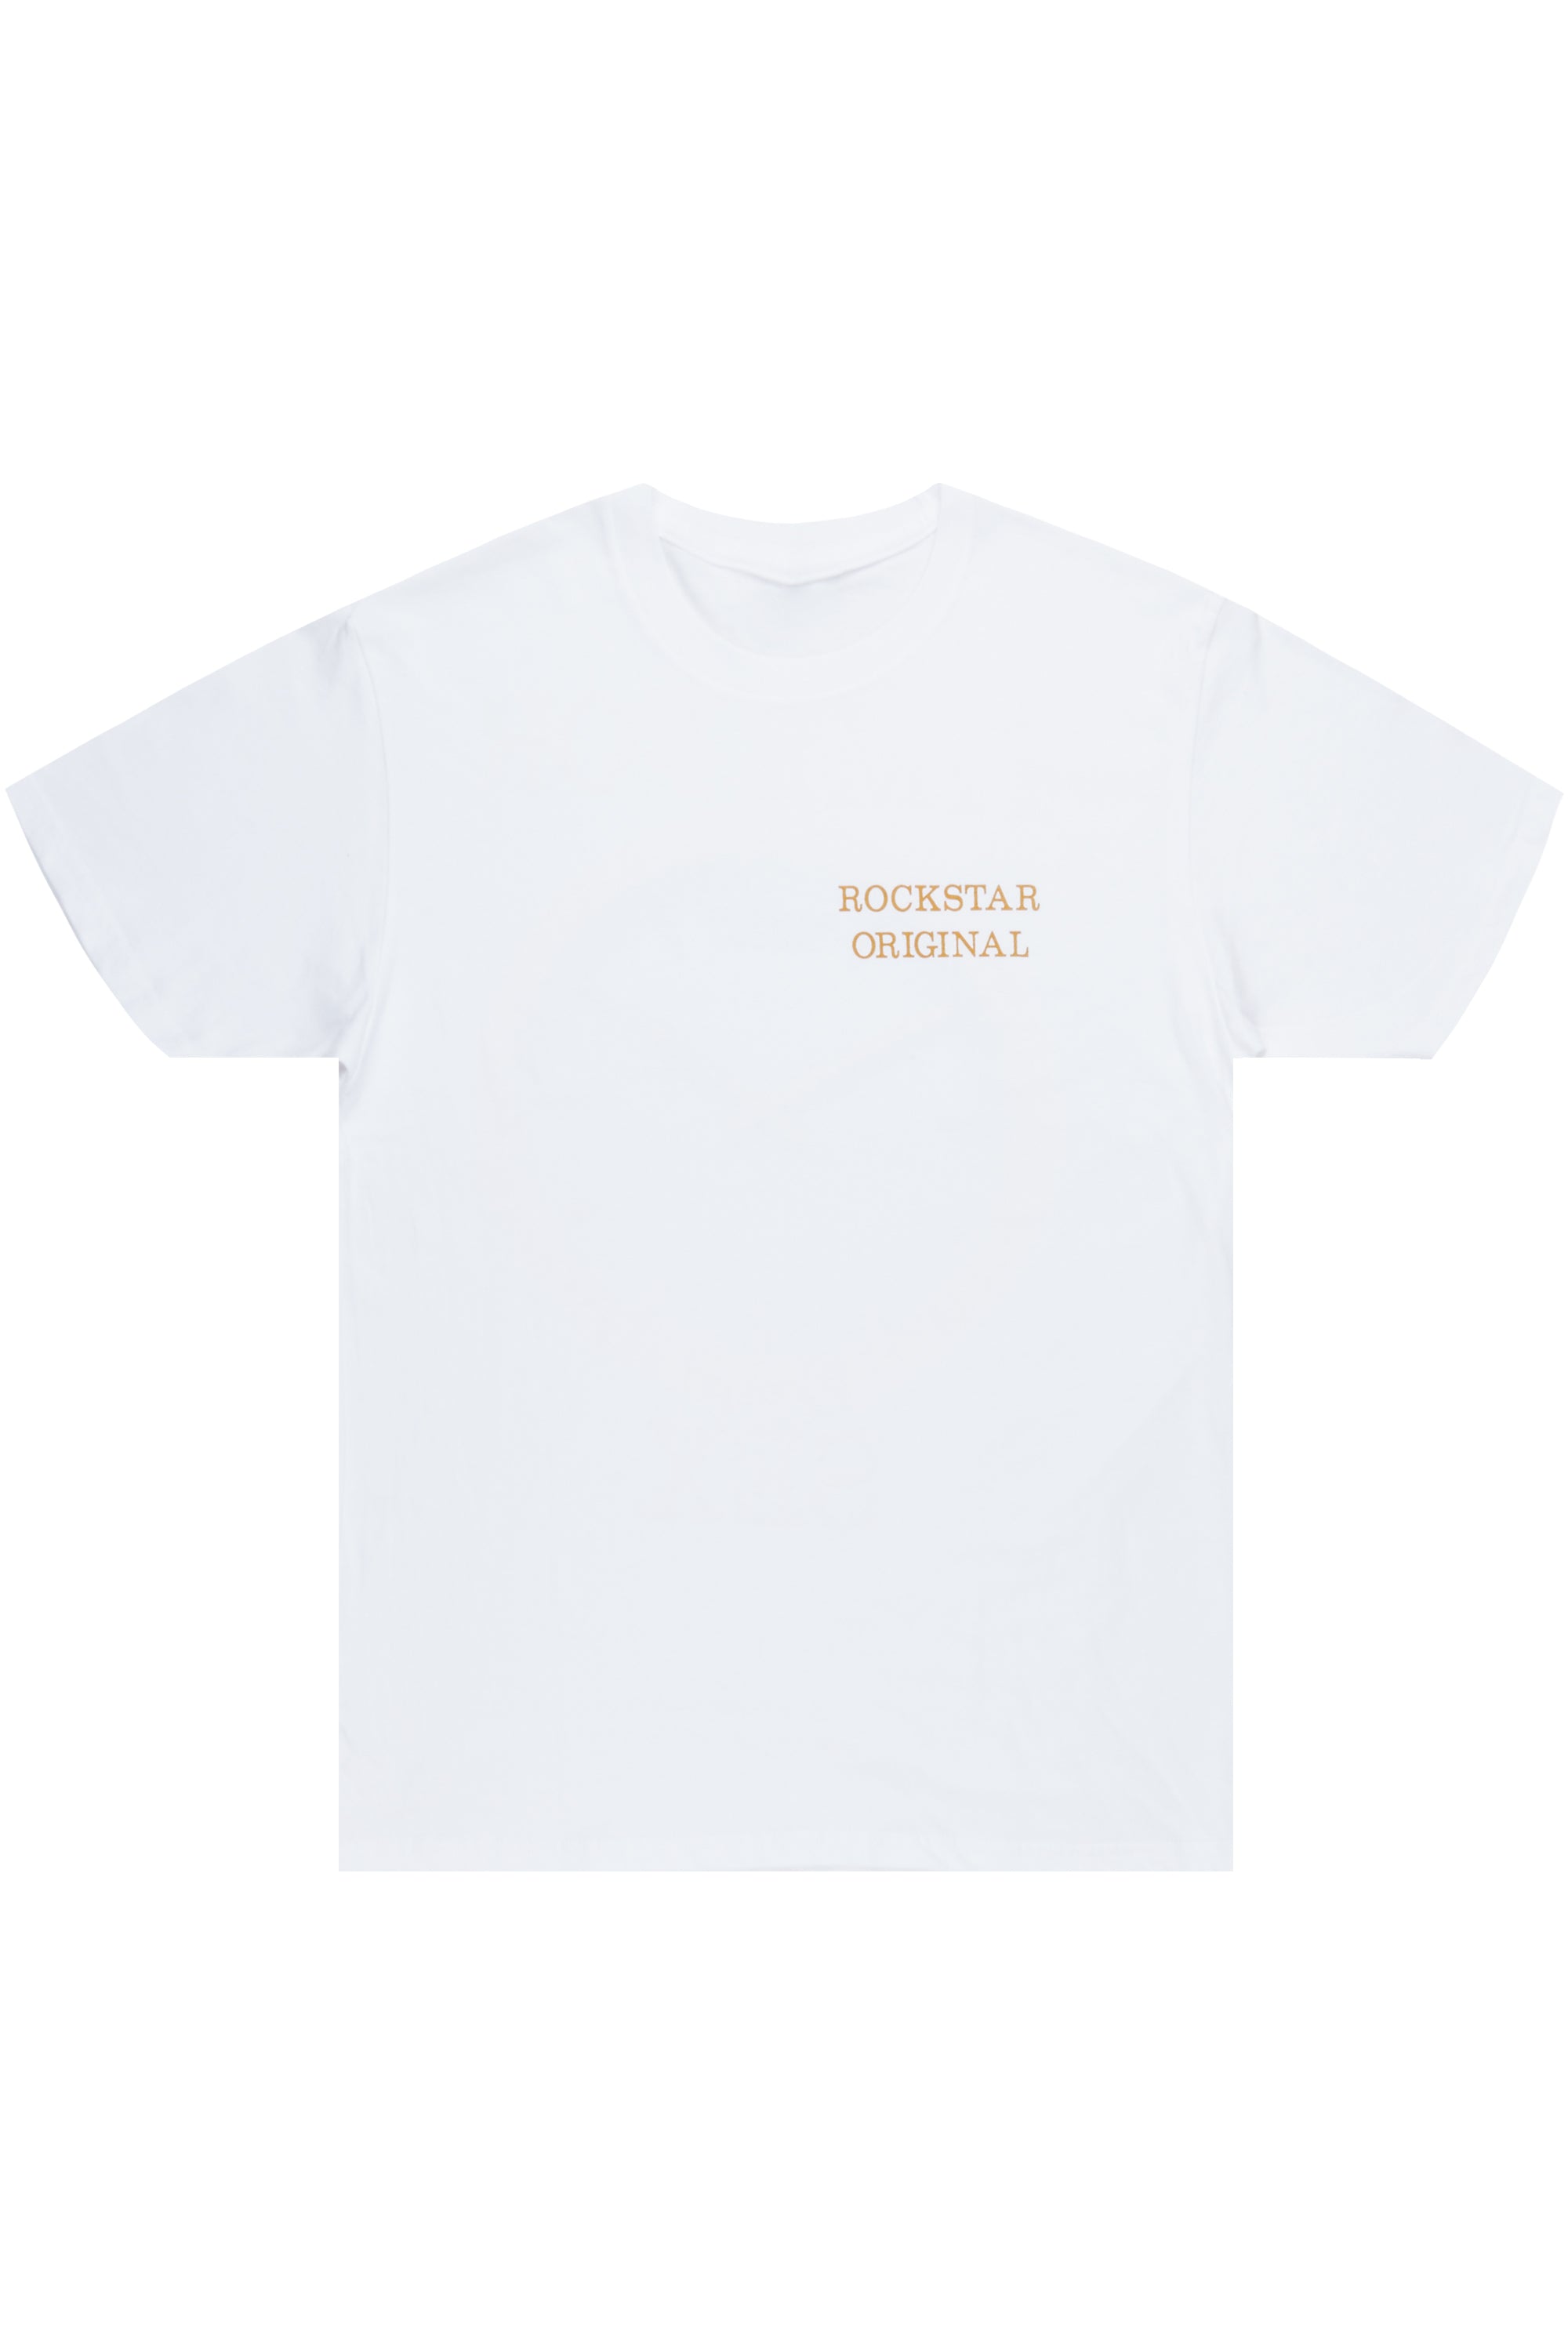 Realex White Graphic T-Shirt